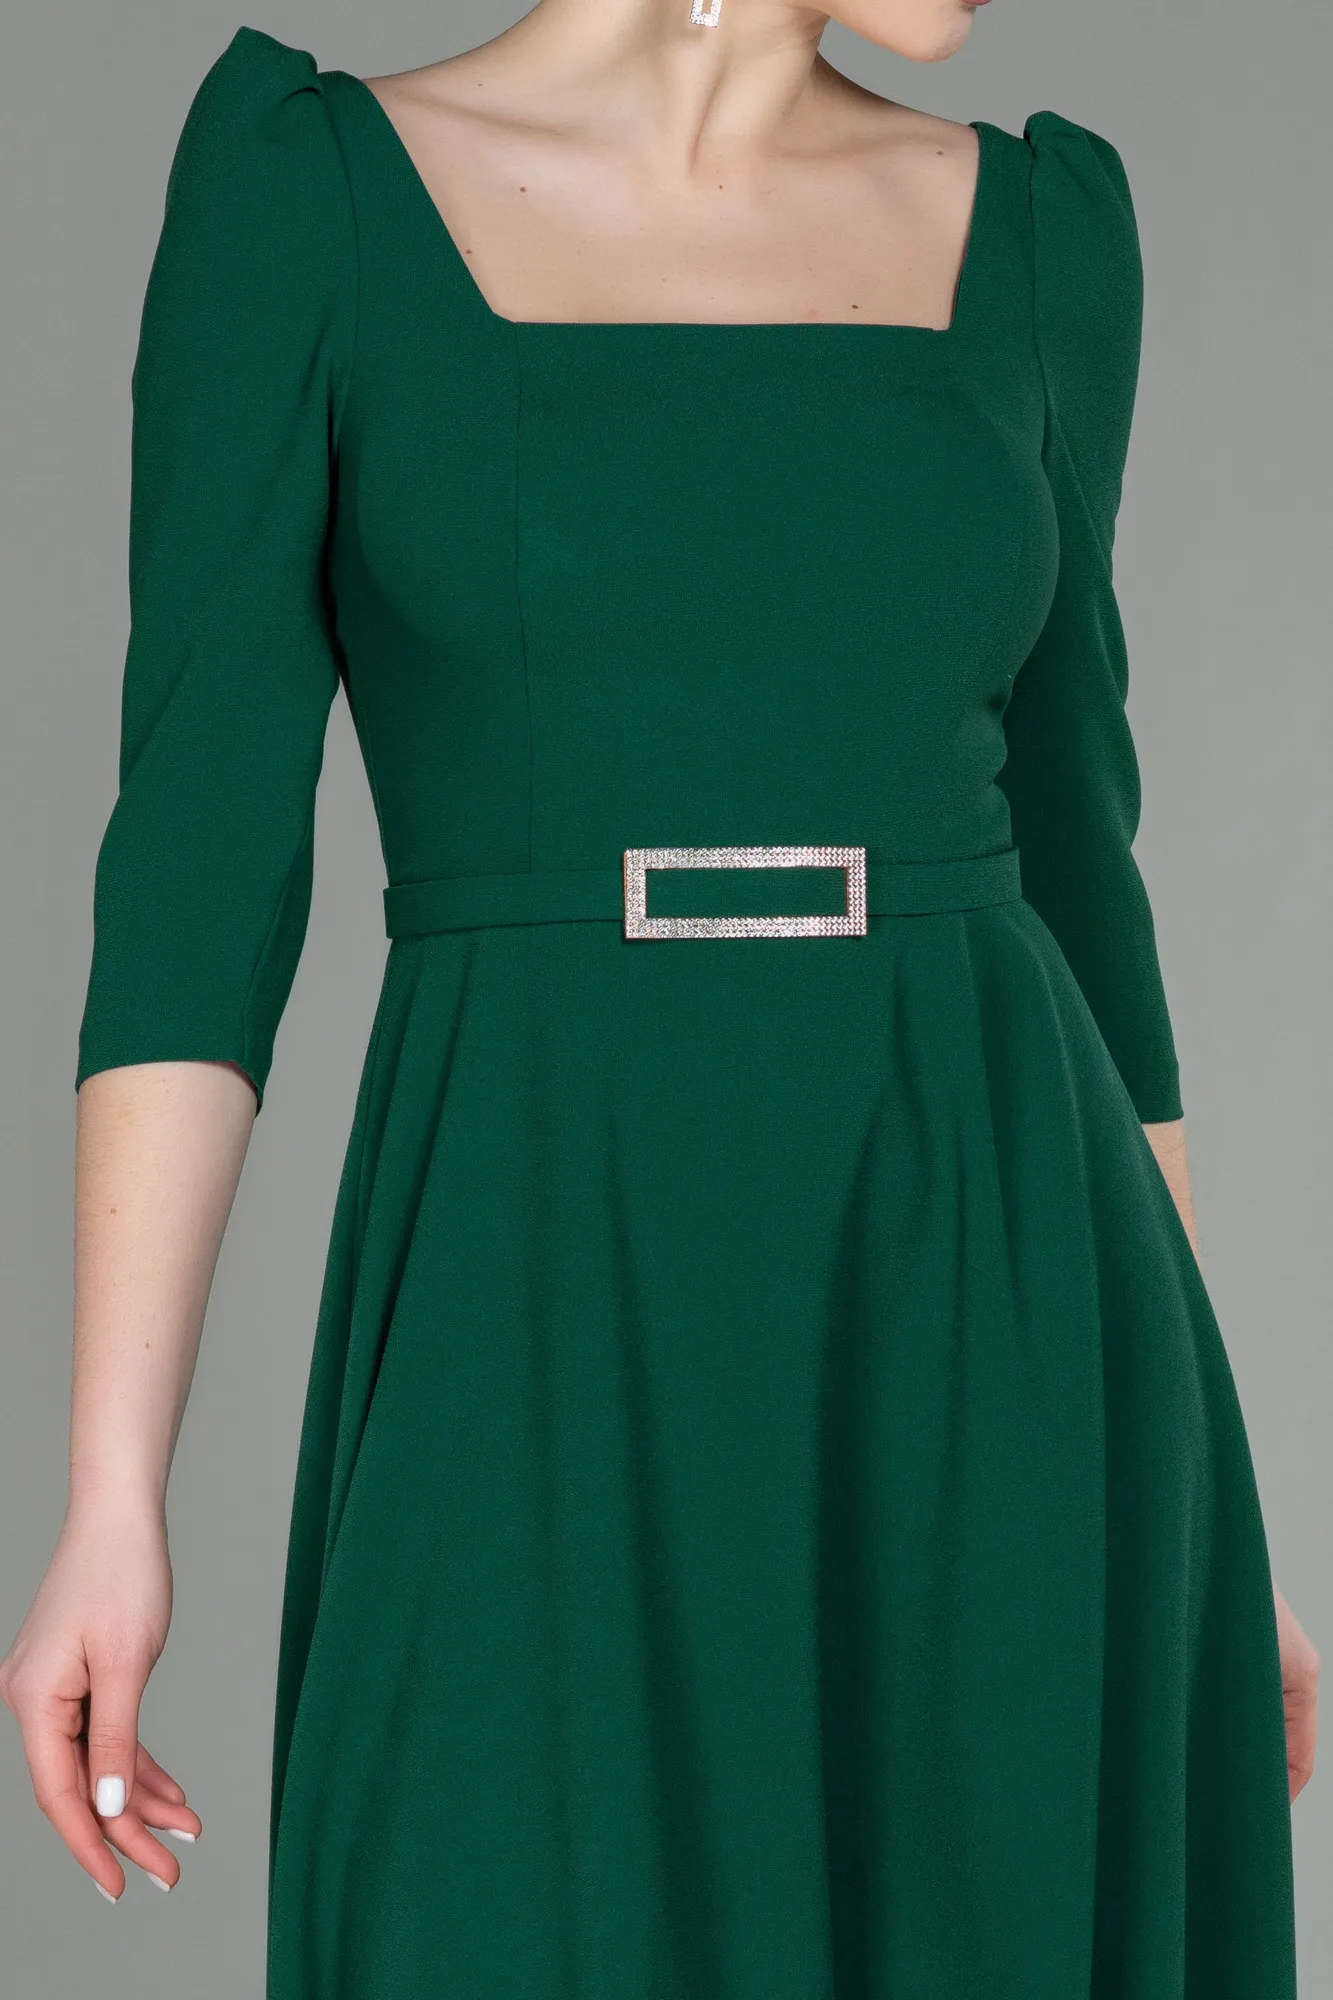 Emerald Green-Midi Invitation Dress ABK1678